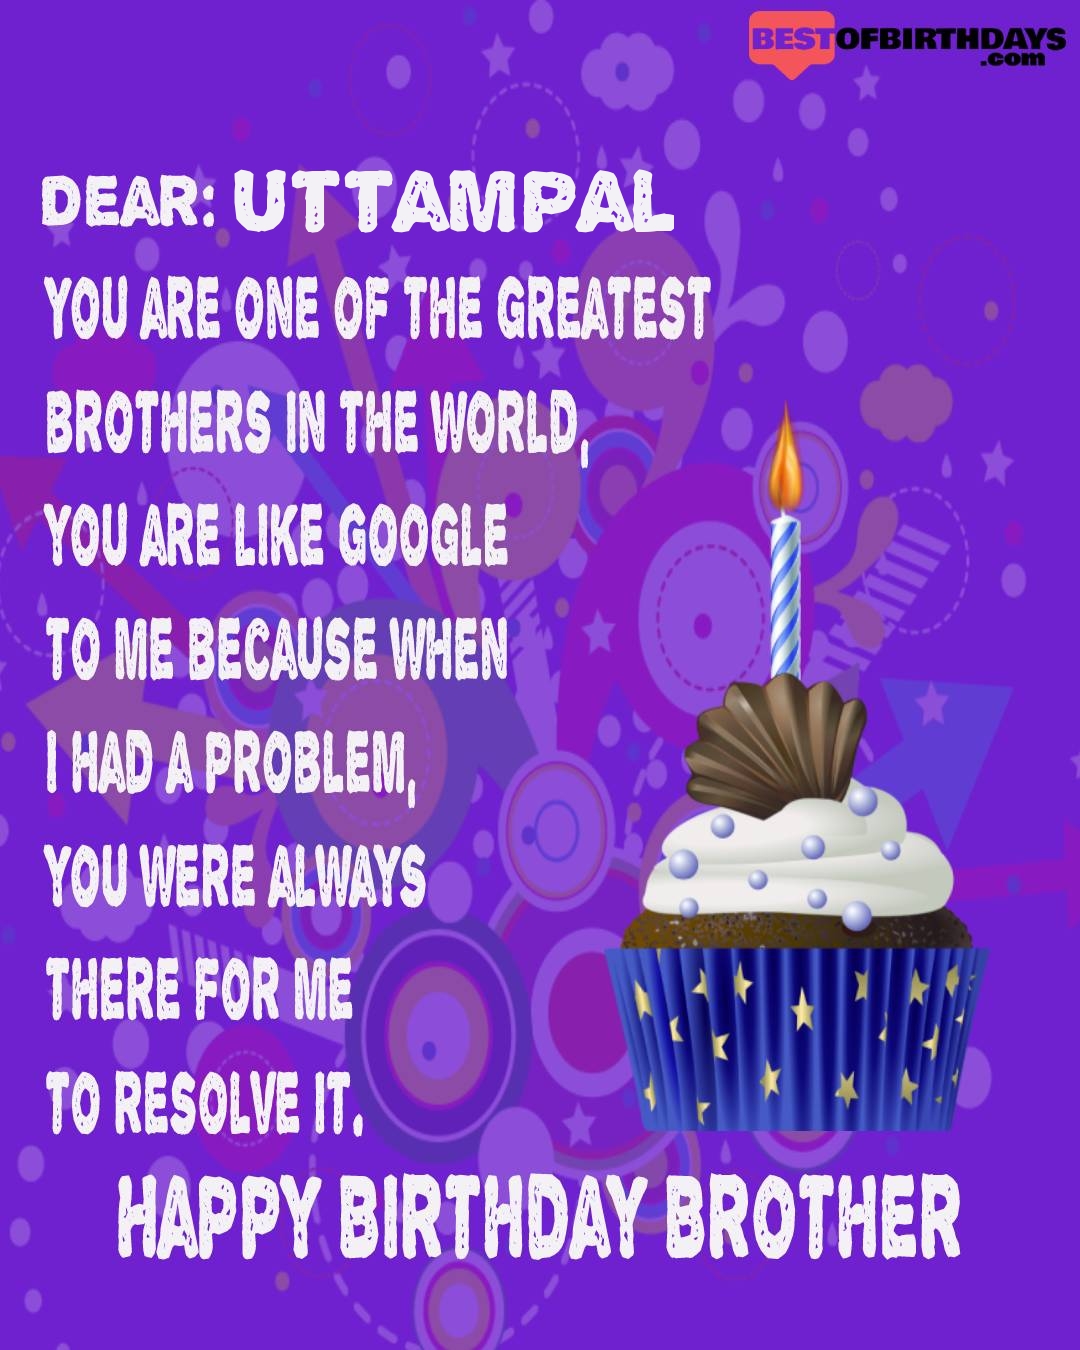 Happy birthday uttampal bhai brother bro